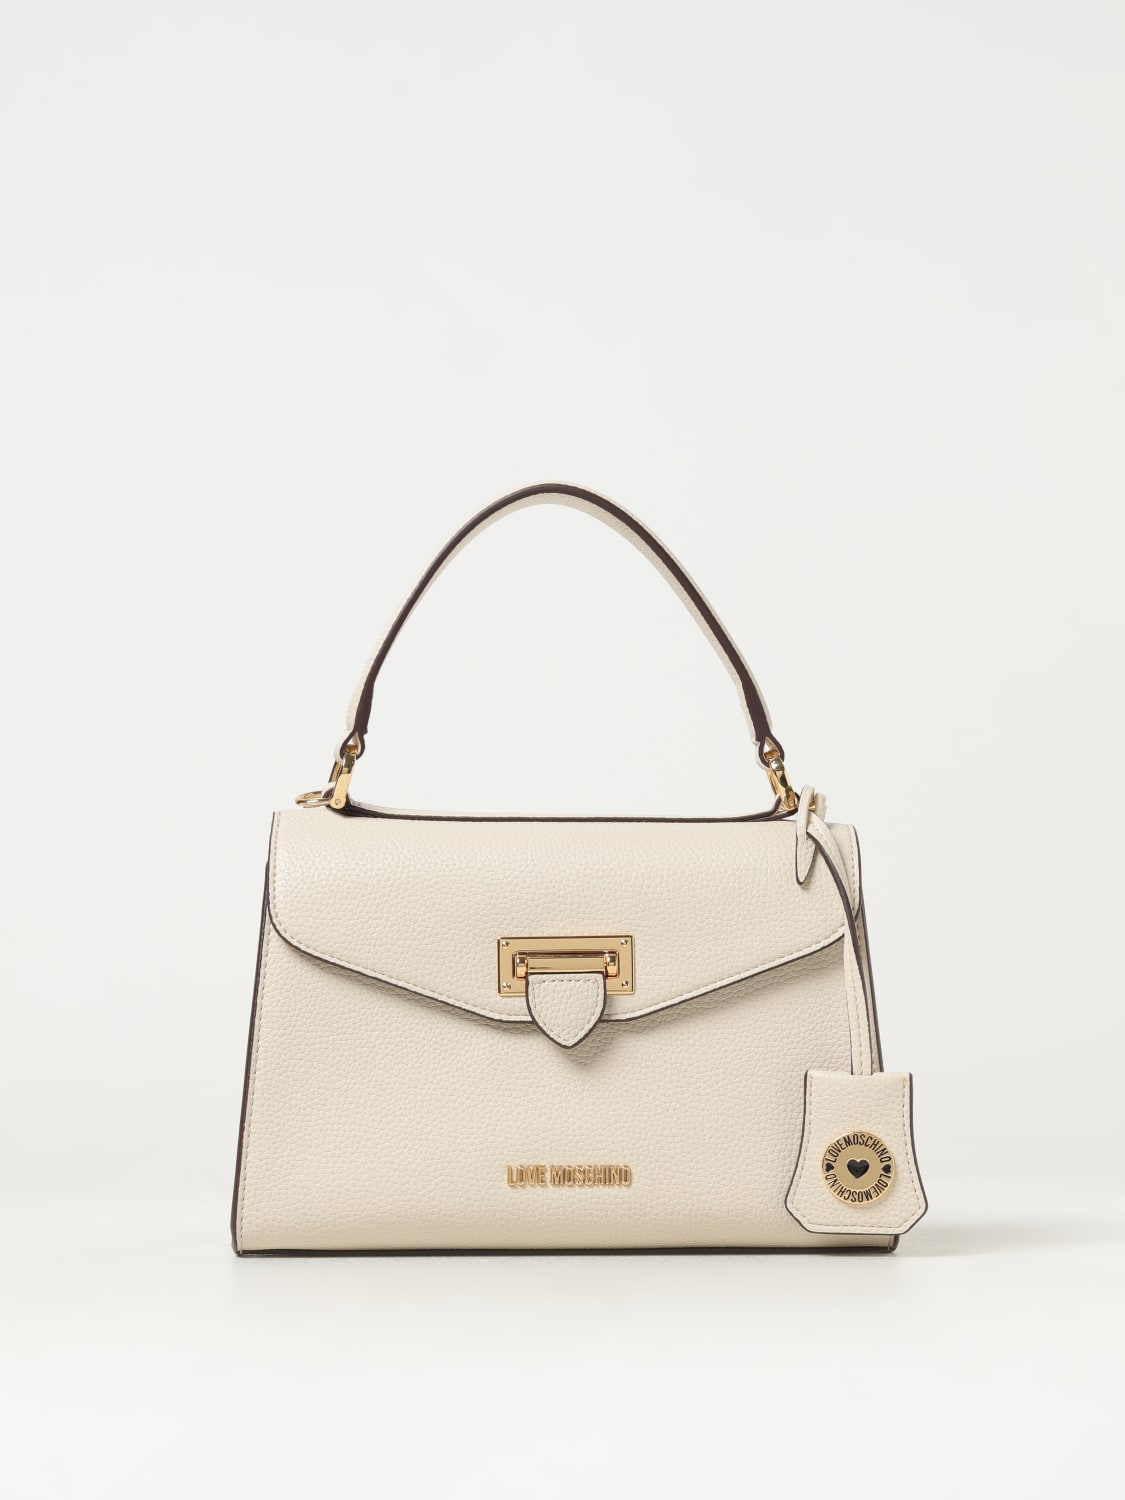 Moschino bag - Women's handbags